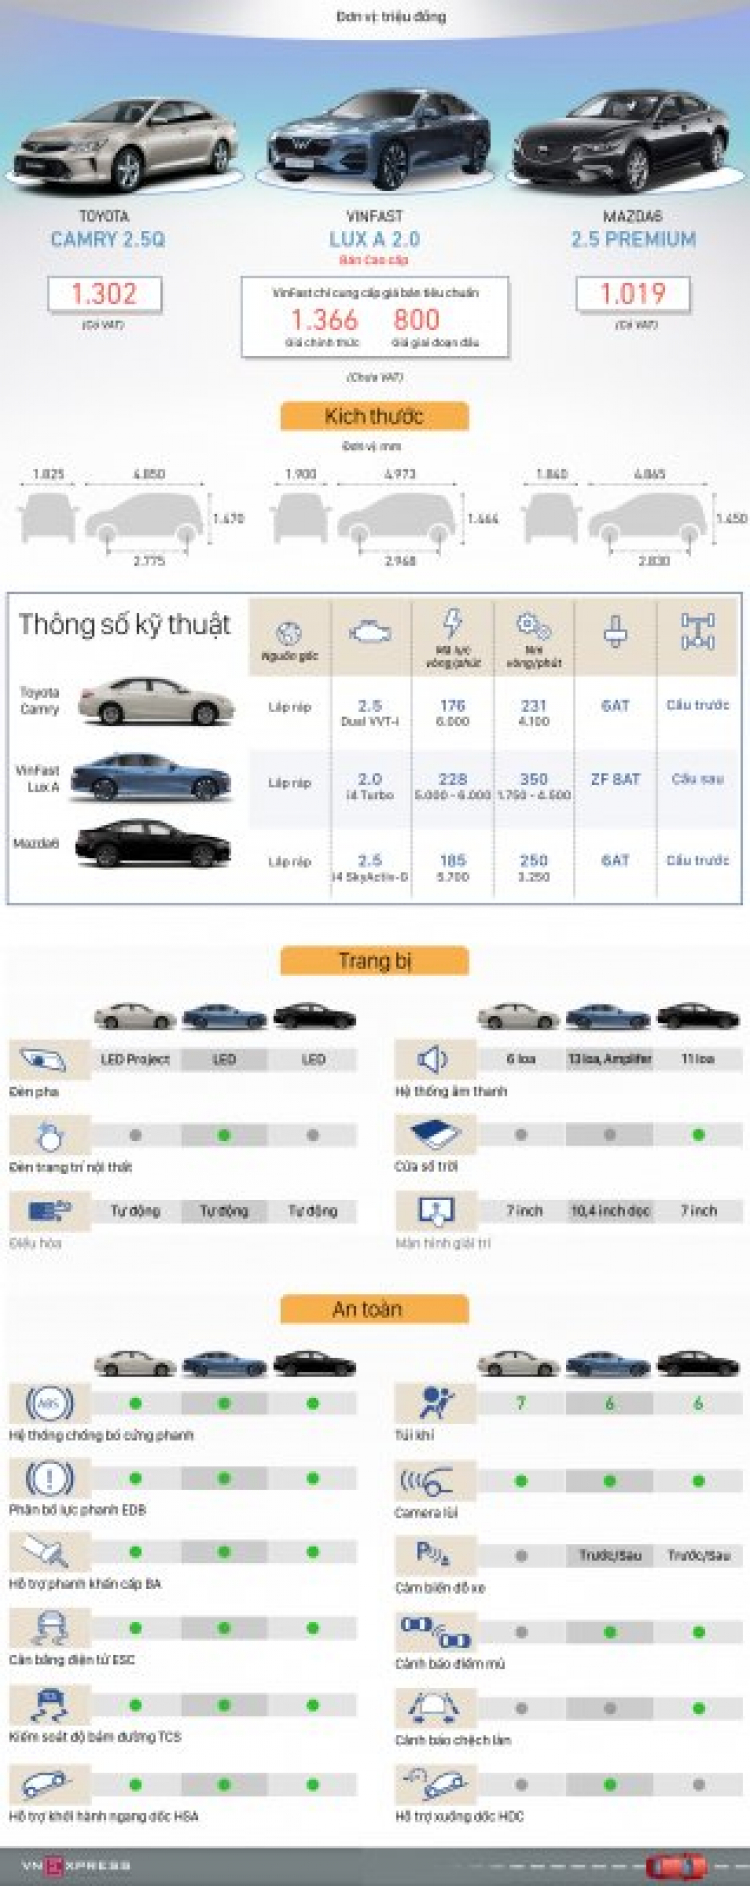 Vinfast Lux A 2.0 vs Camry 2.5Q vs Mazda6 2.5 Premium